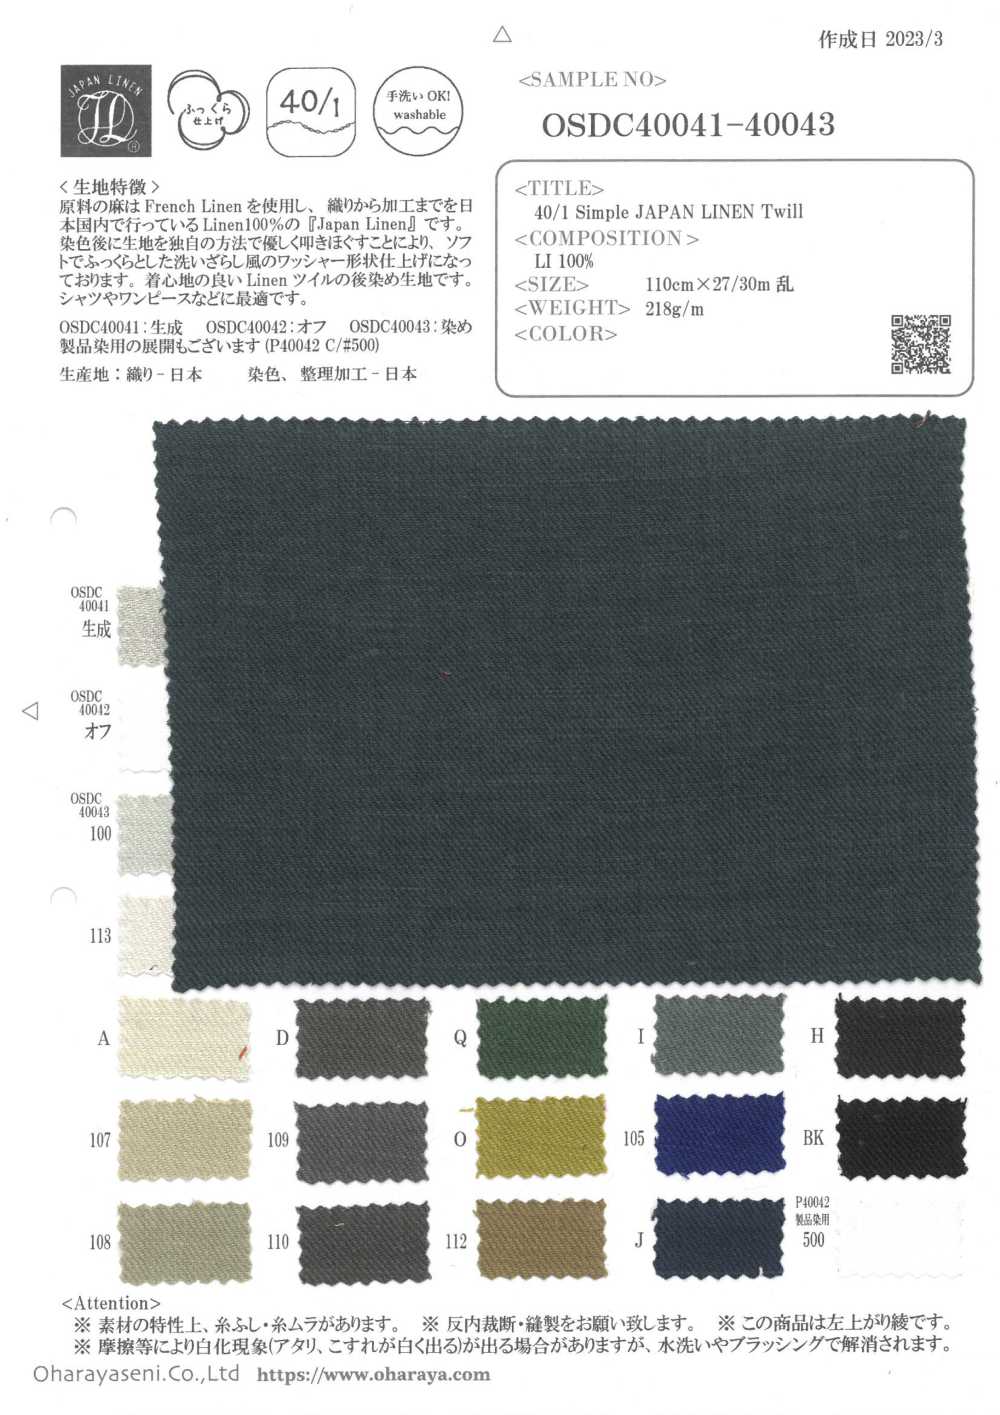 OSDC40041 40/1 Simple JAPAN LINEN Twill (キナリ)[生地] 小原屋繊維